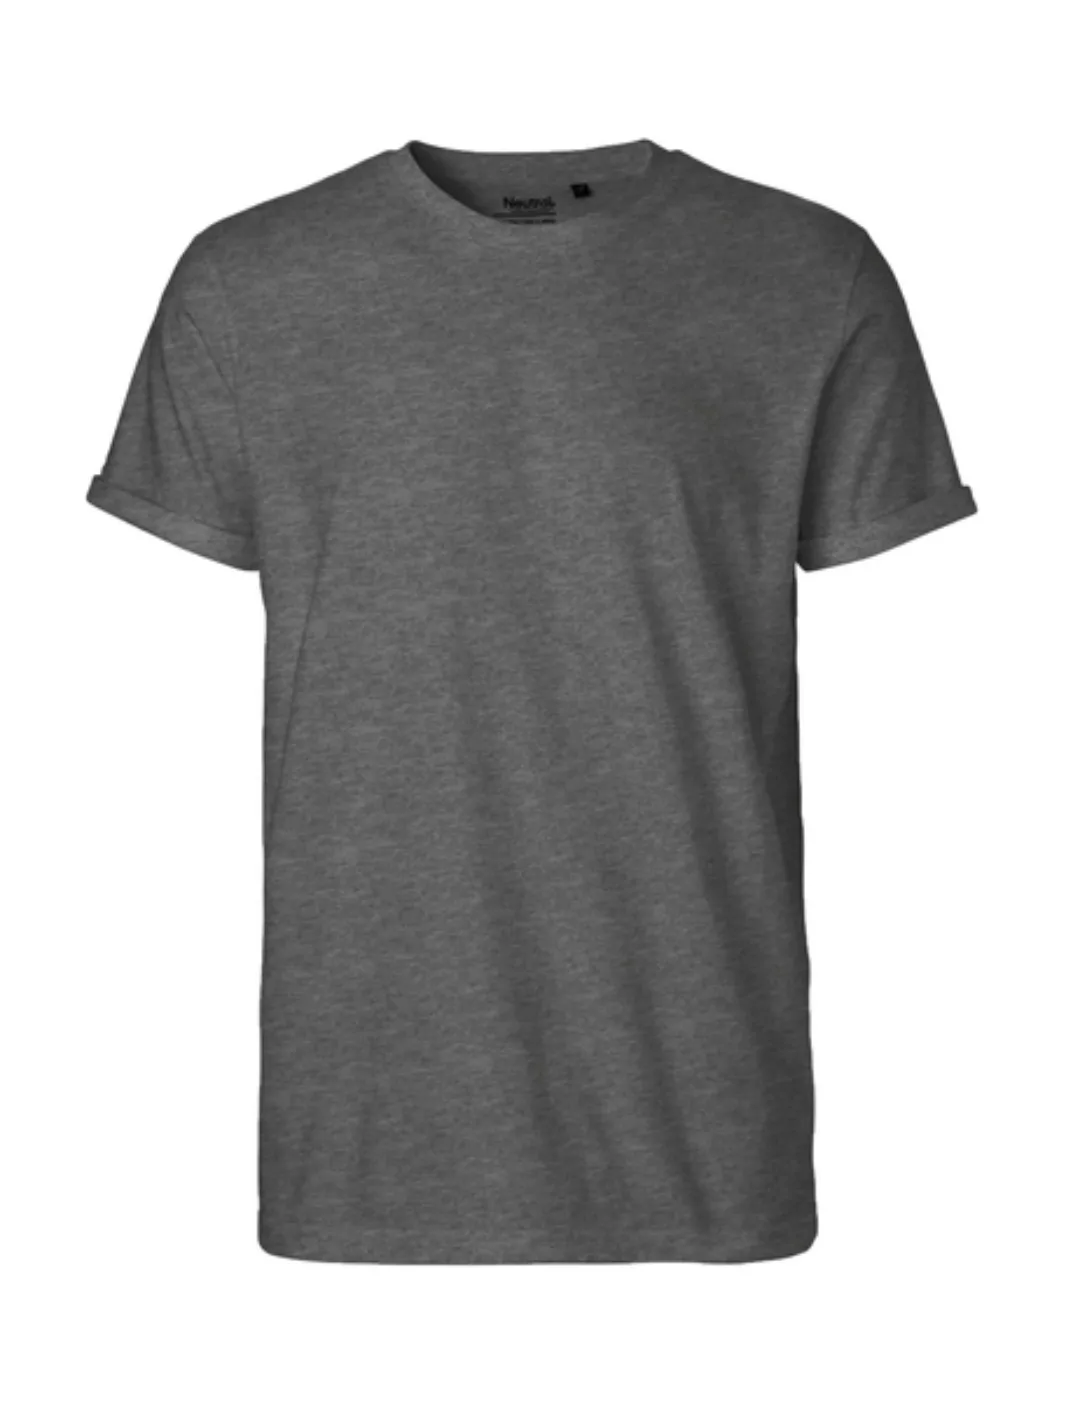 Männer T-shirt Roll-up günstig online kaufen